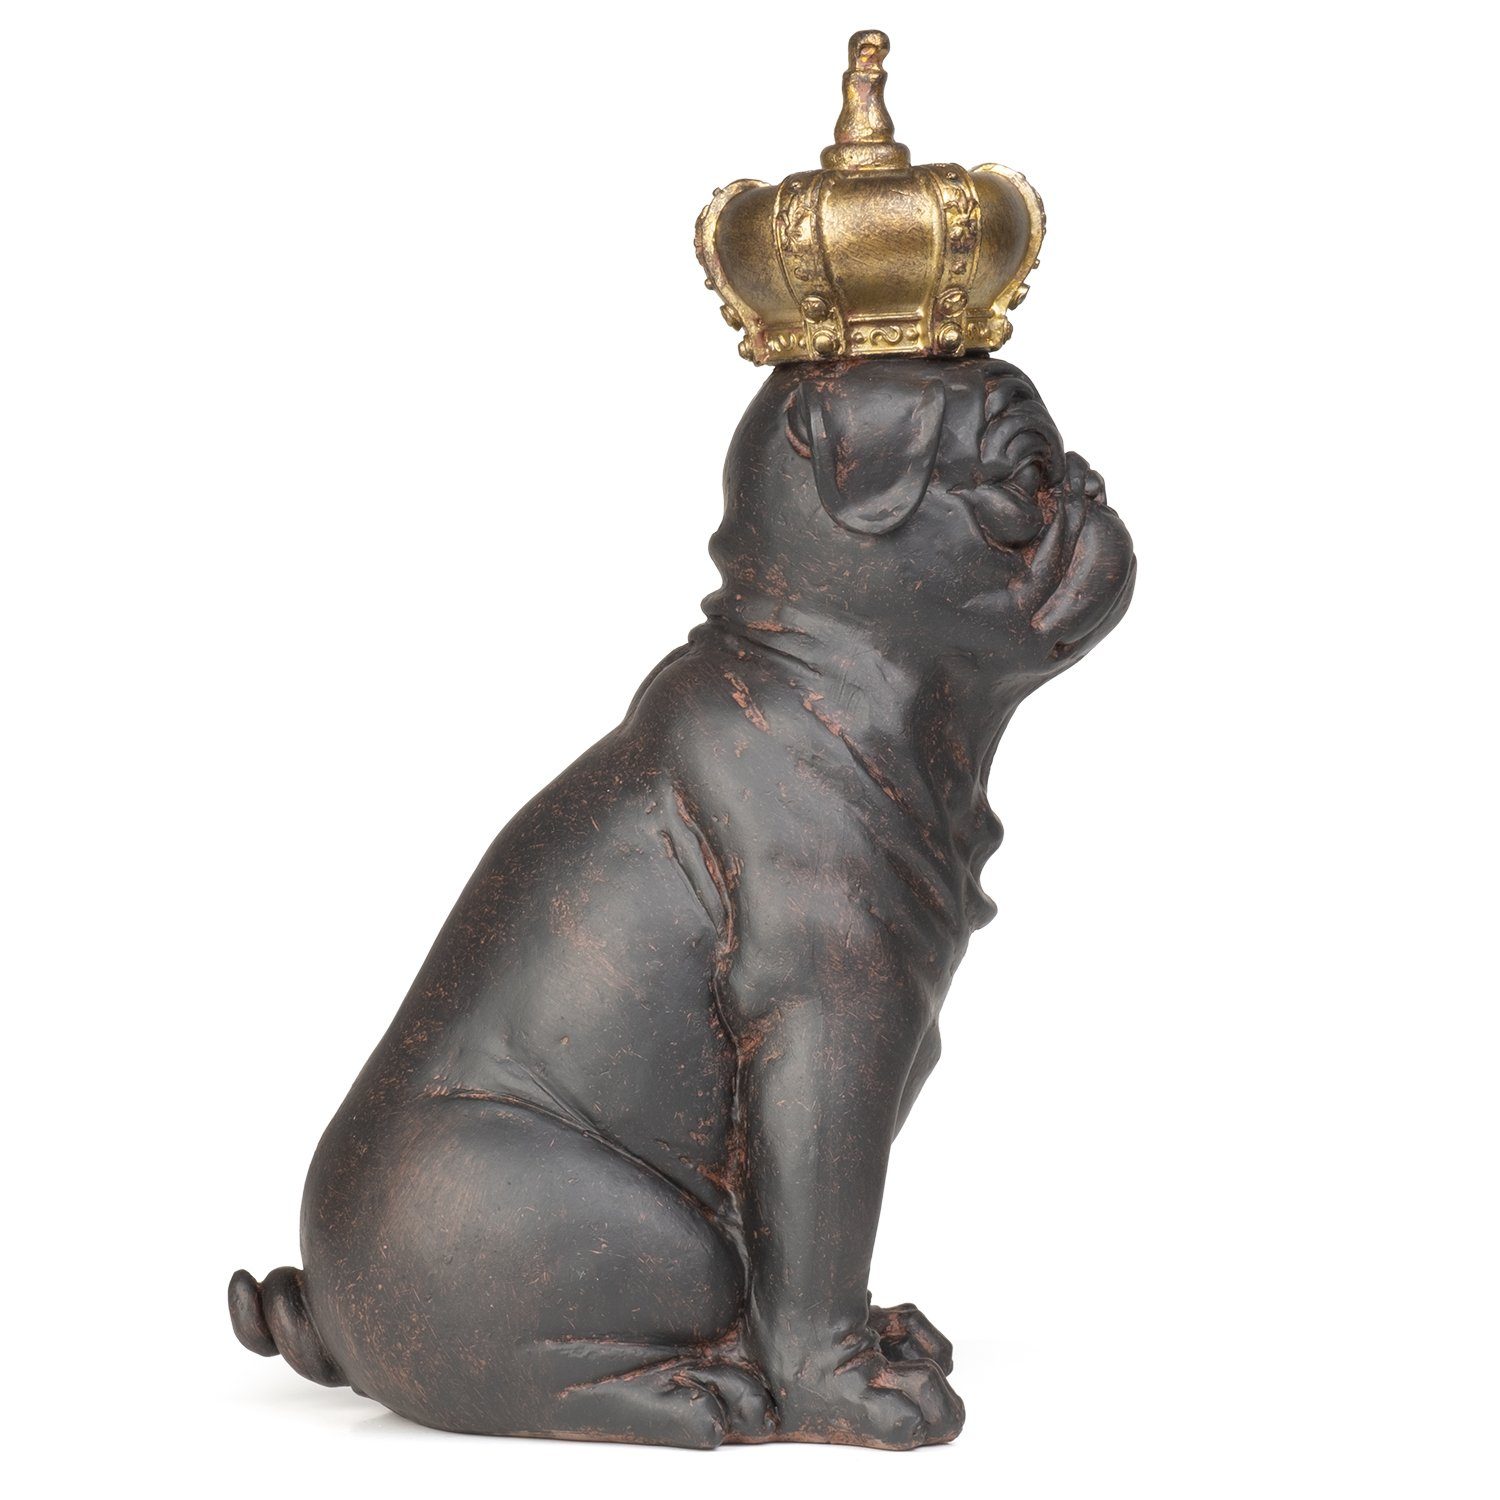 Moritz Dekofigur Deko-Figur Mops aus mit Polyresin, Krone aus Figuren sitz Dekoelement Dekofigur Dekoration Polyresin Hunde-König